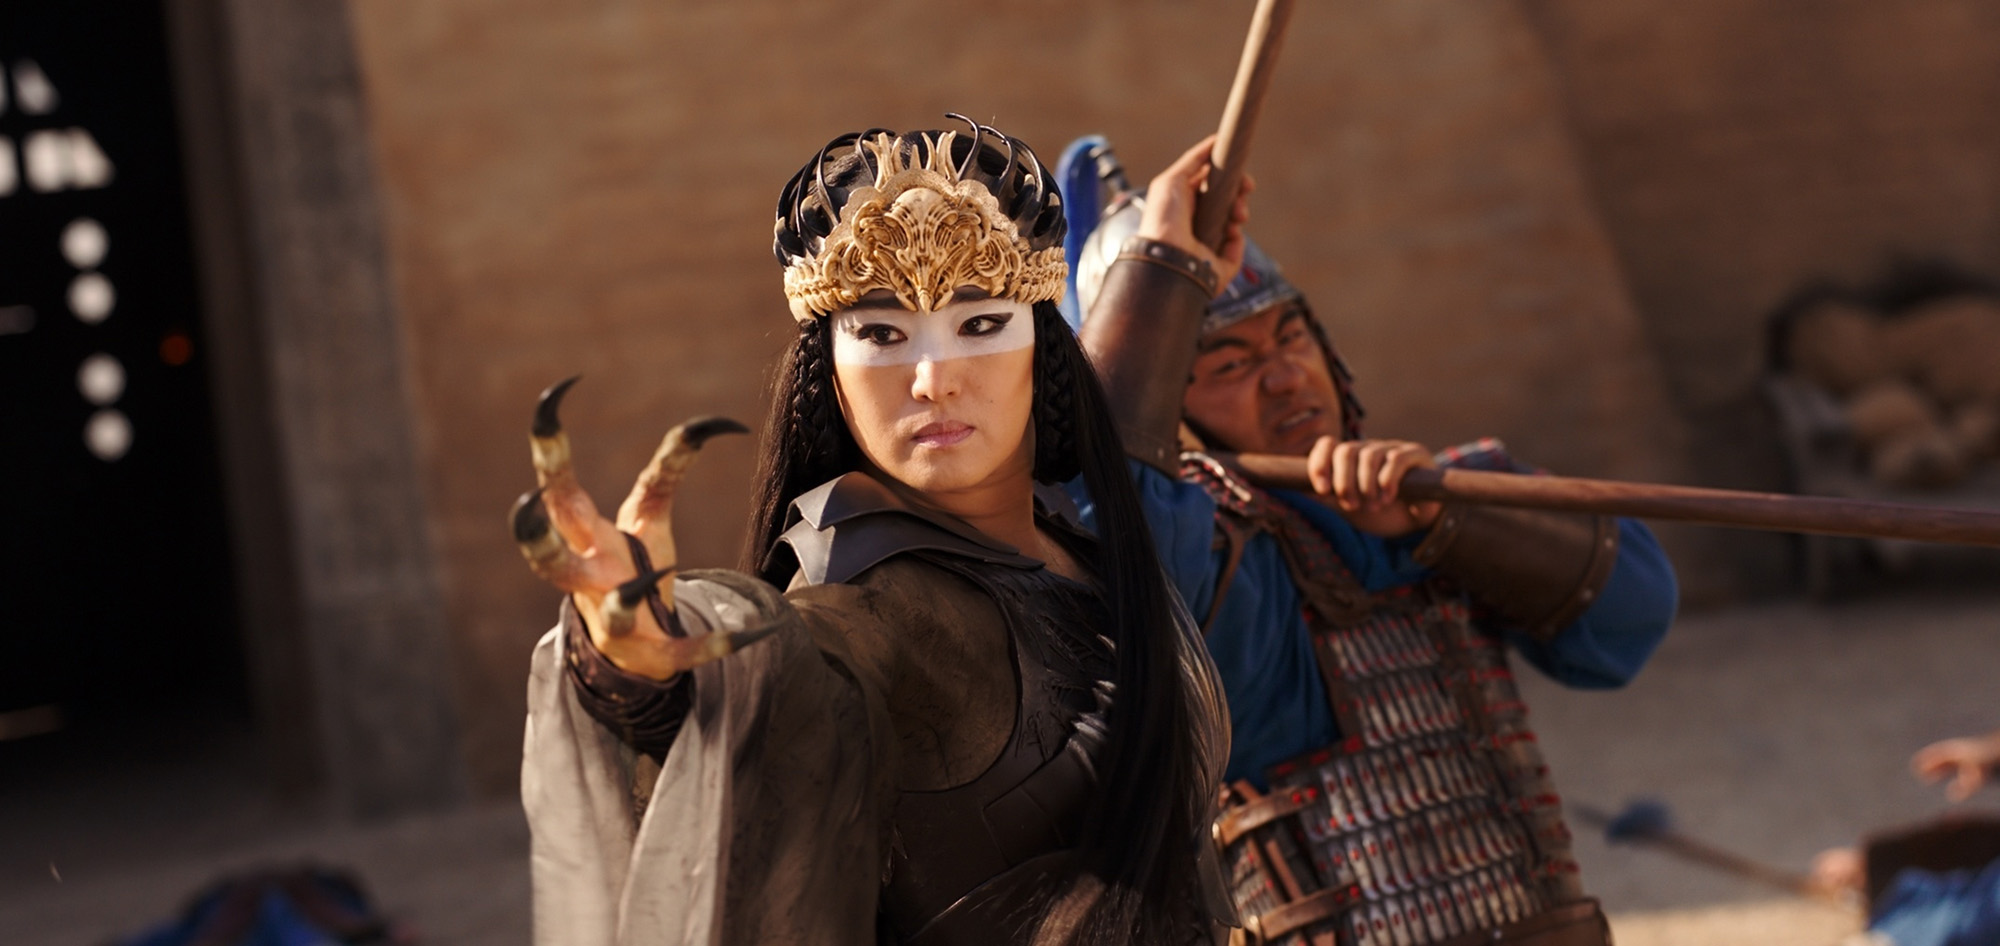 Kadr z filmu Mulan (Fot. Jasin Boland/Capital Pictures/East News)